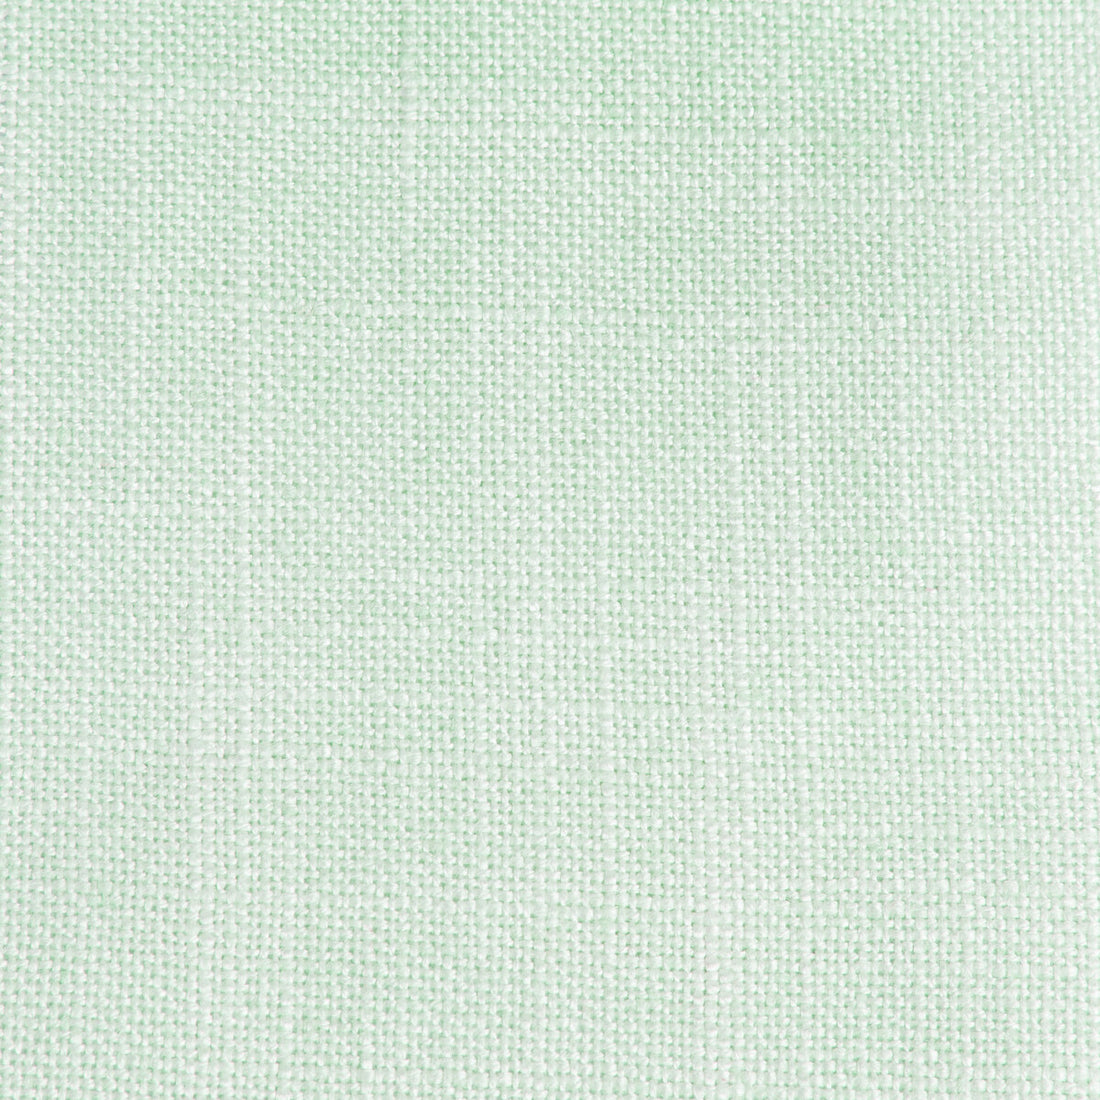 Peru fabric in azul claro color - pattern GDT5548.021.0 - by Gaston y Daniela in the Gaston Nuevo Mundo collection